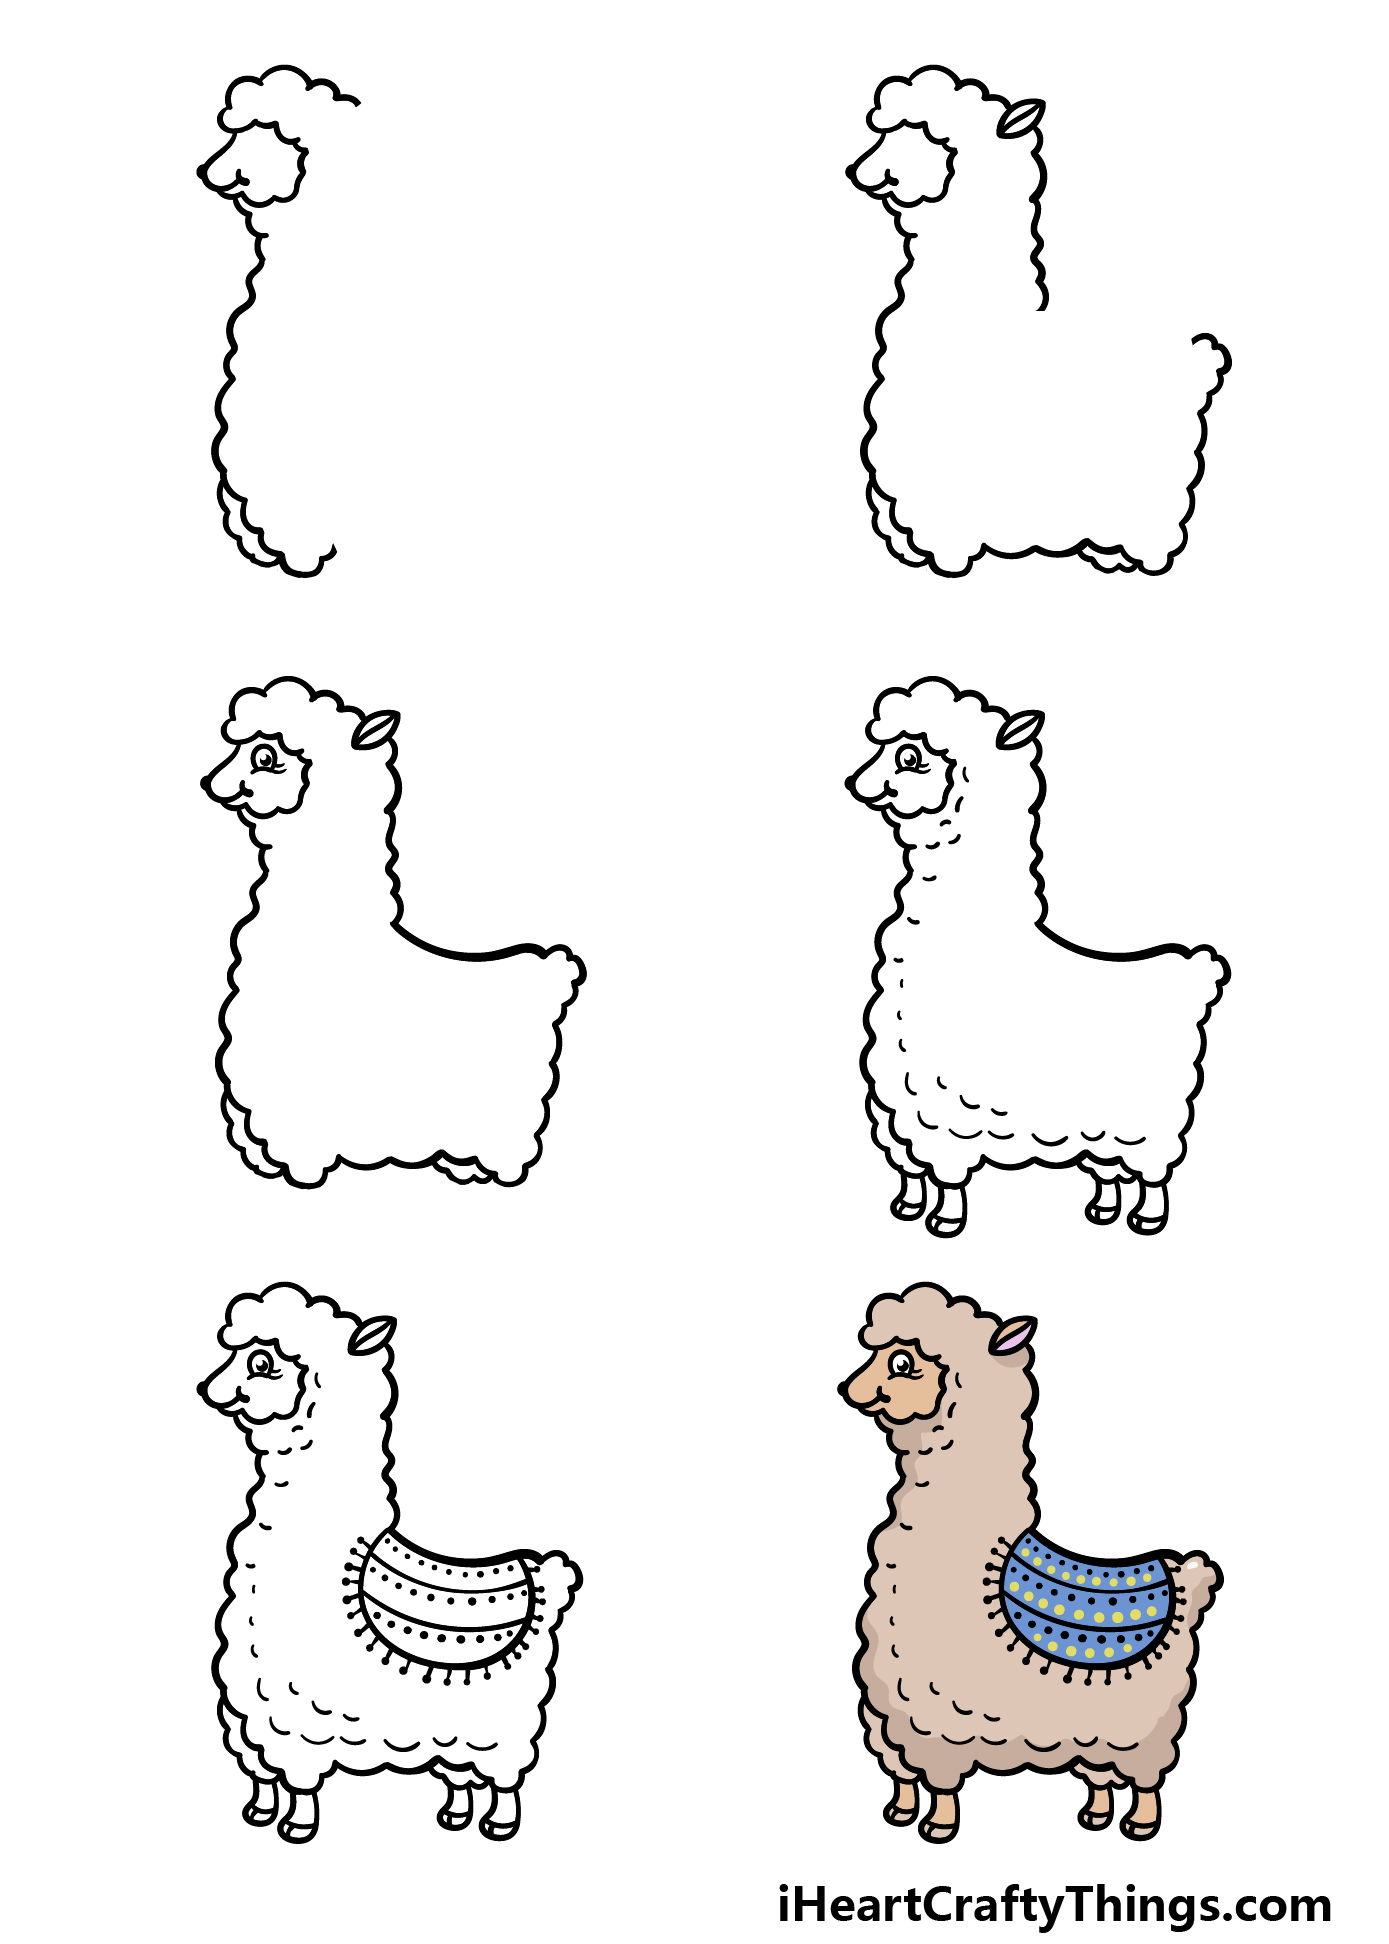 how to draw cartoon llama in 6 steps